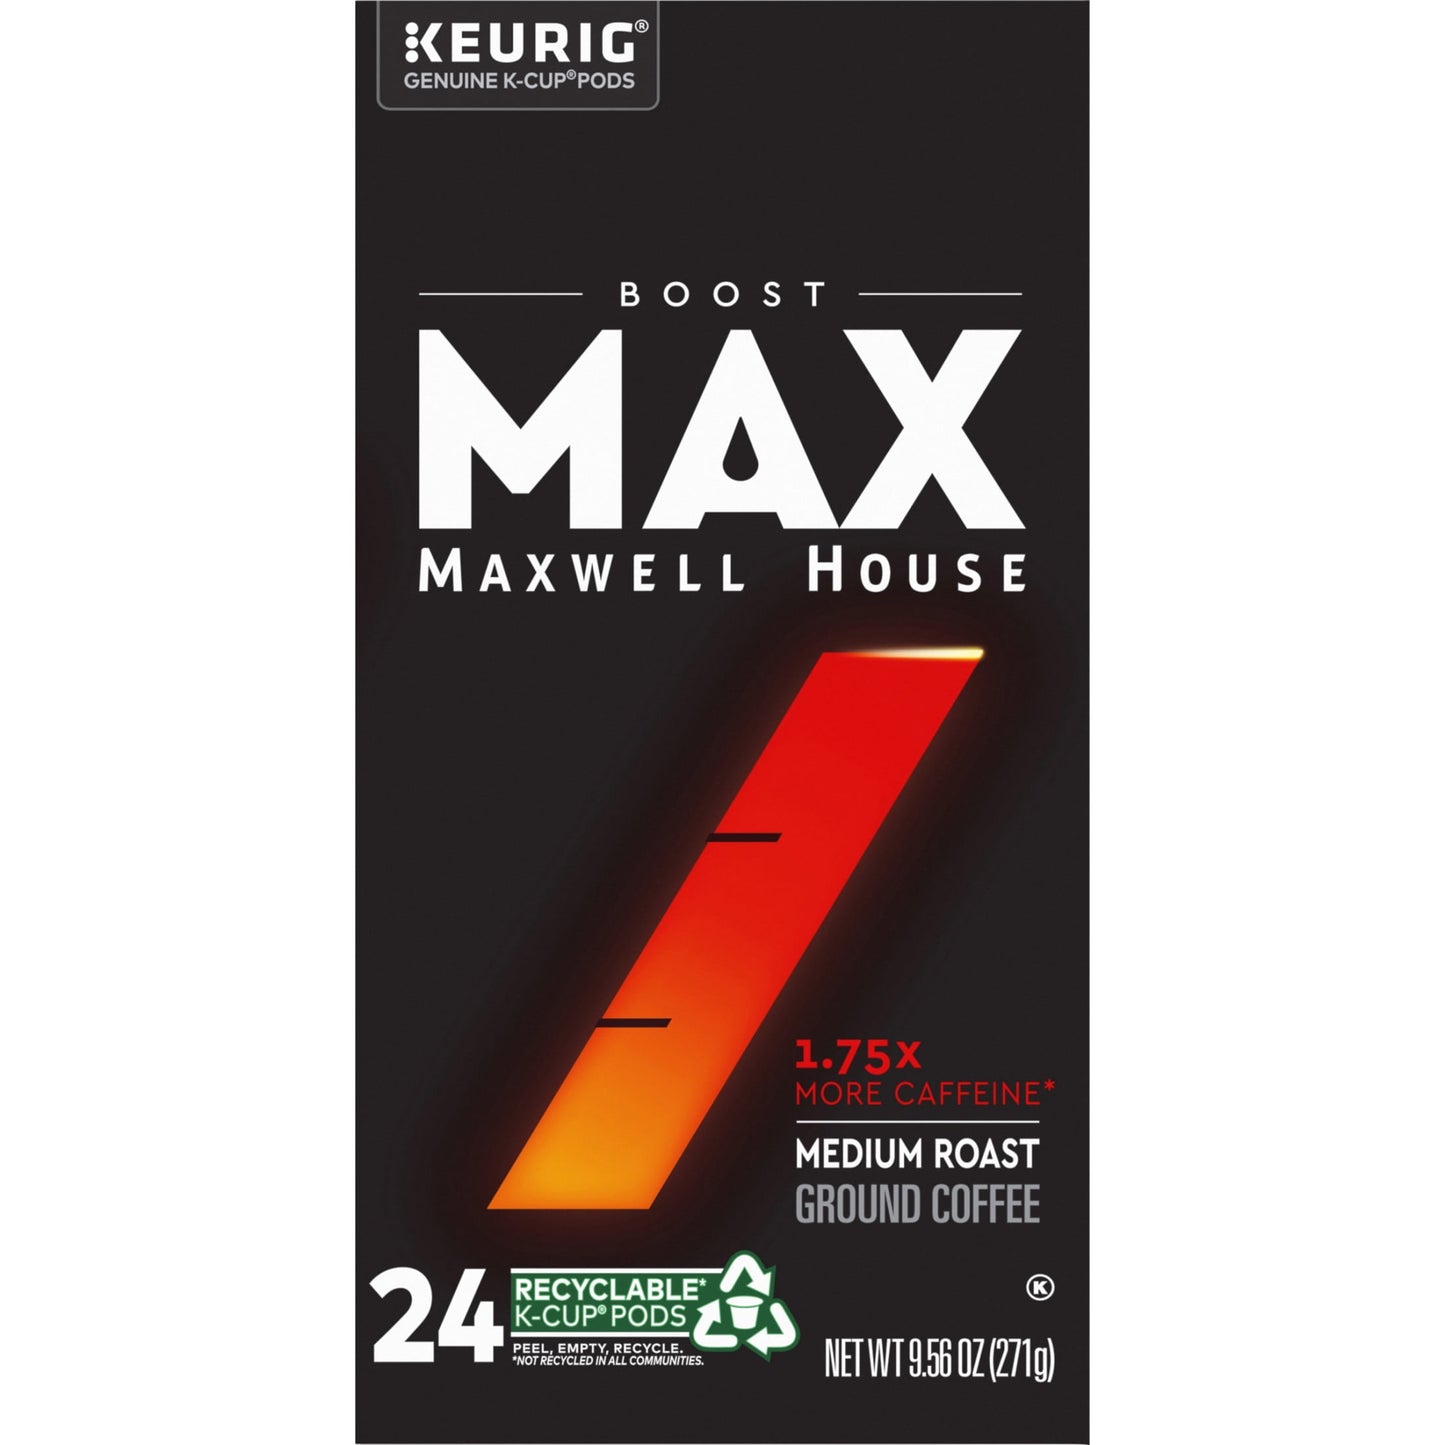 MAX Boost By Maxwell House Medium Roast 1.75X Caffeine K-Cup Coffee Po